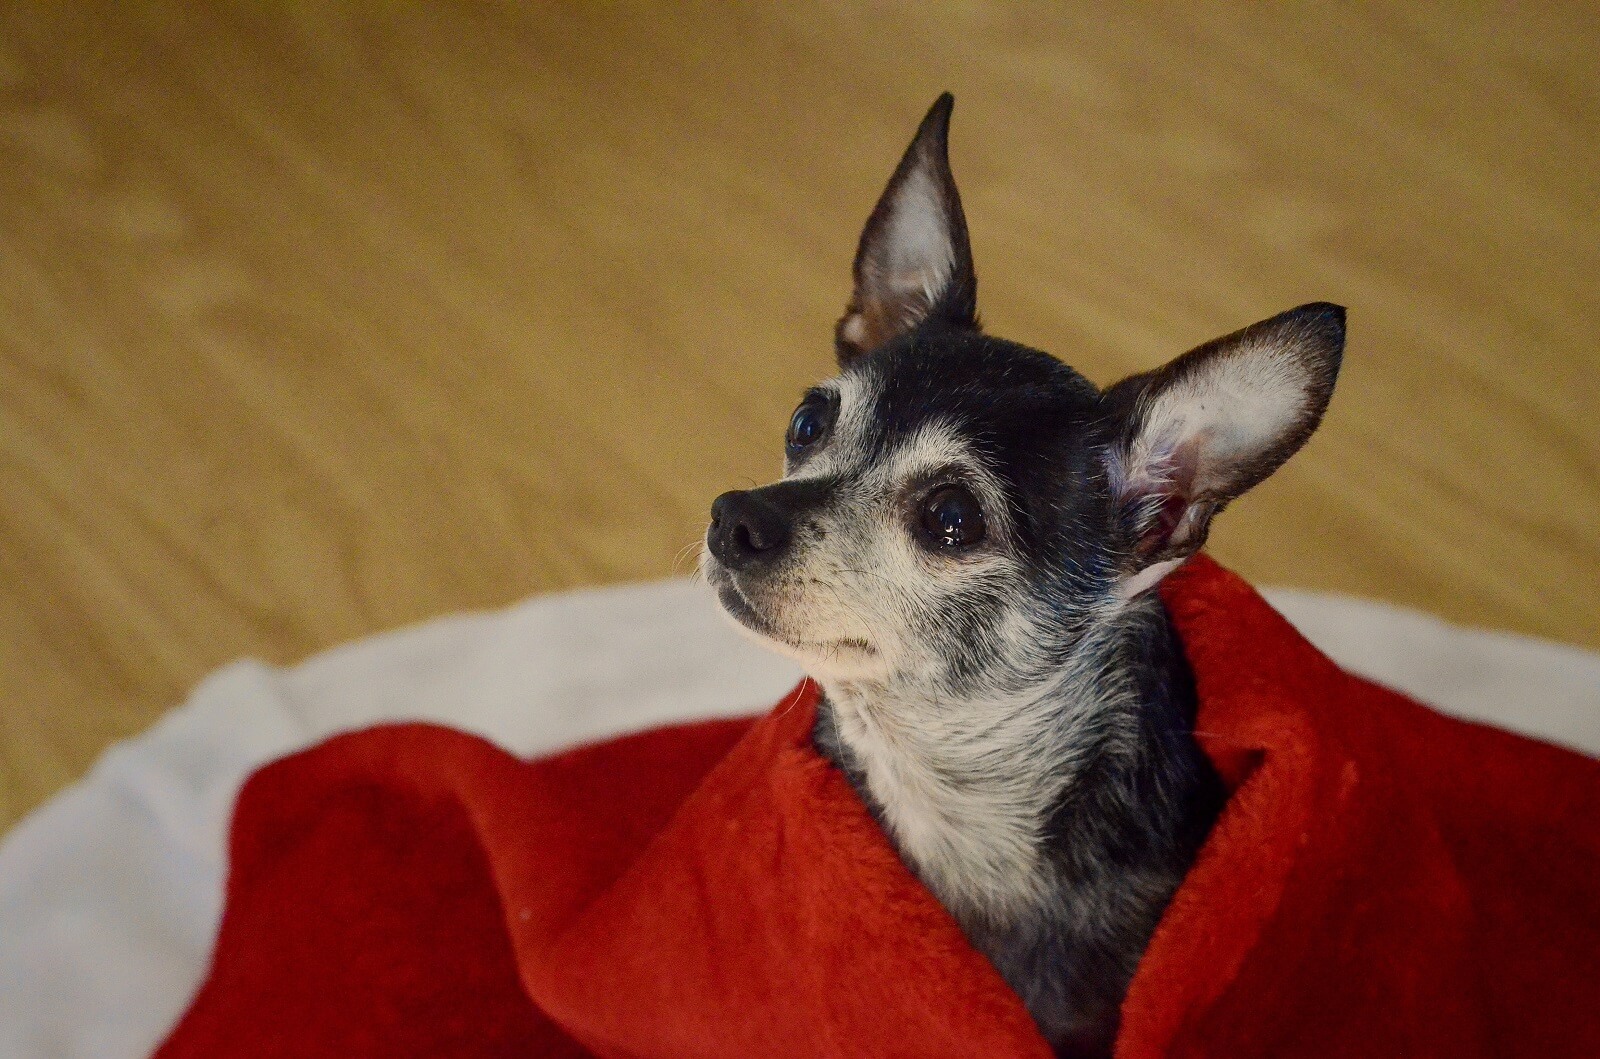 Chihuahua Dog Breed